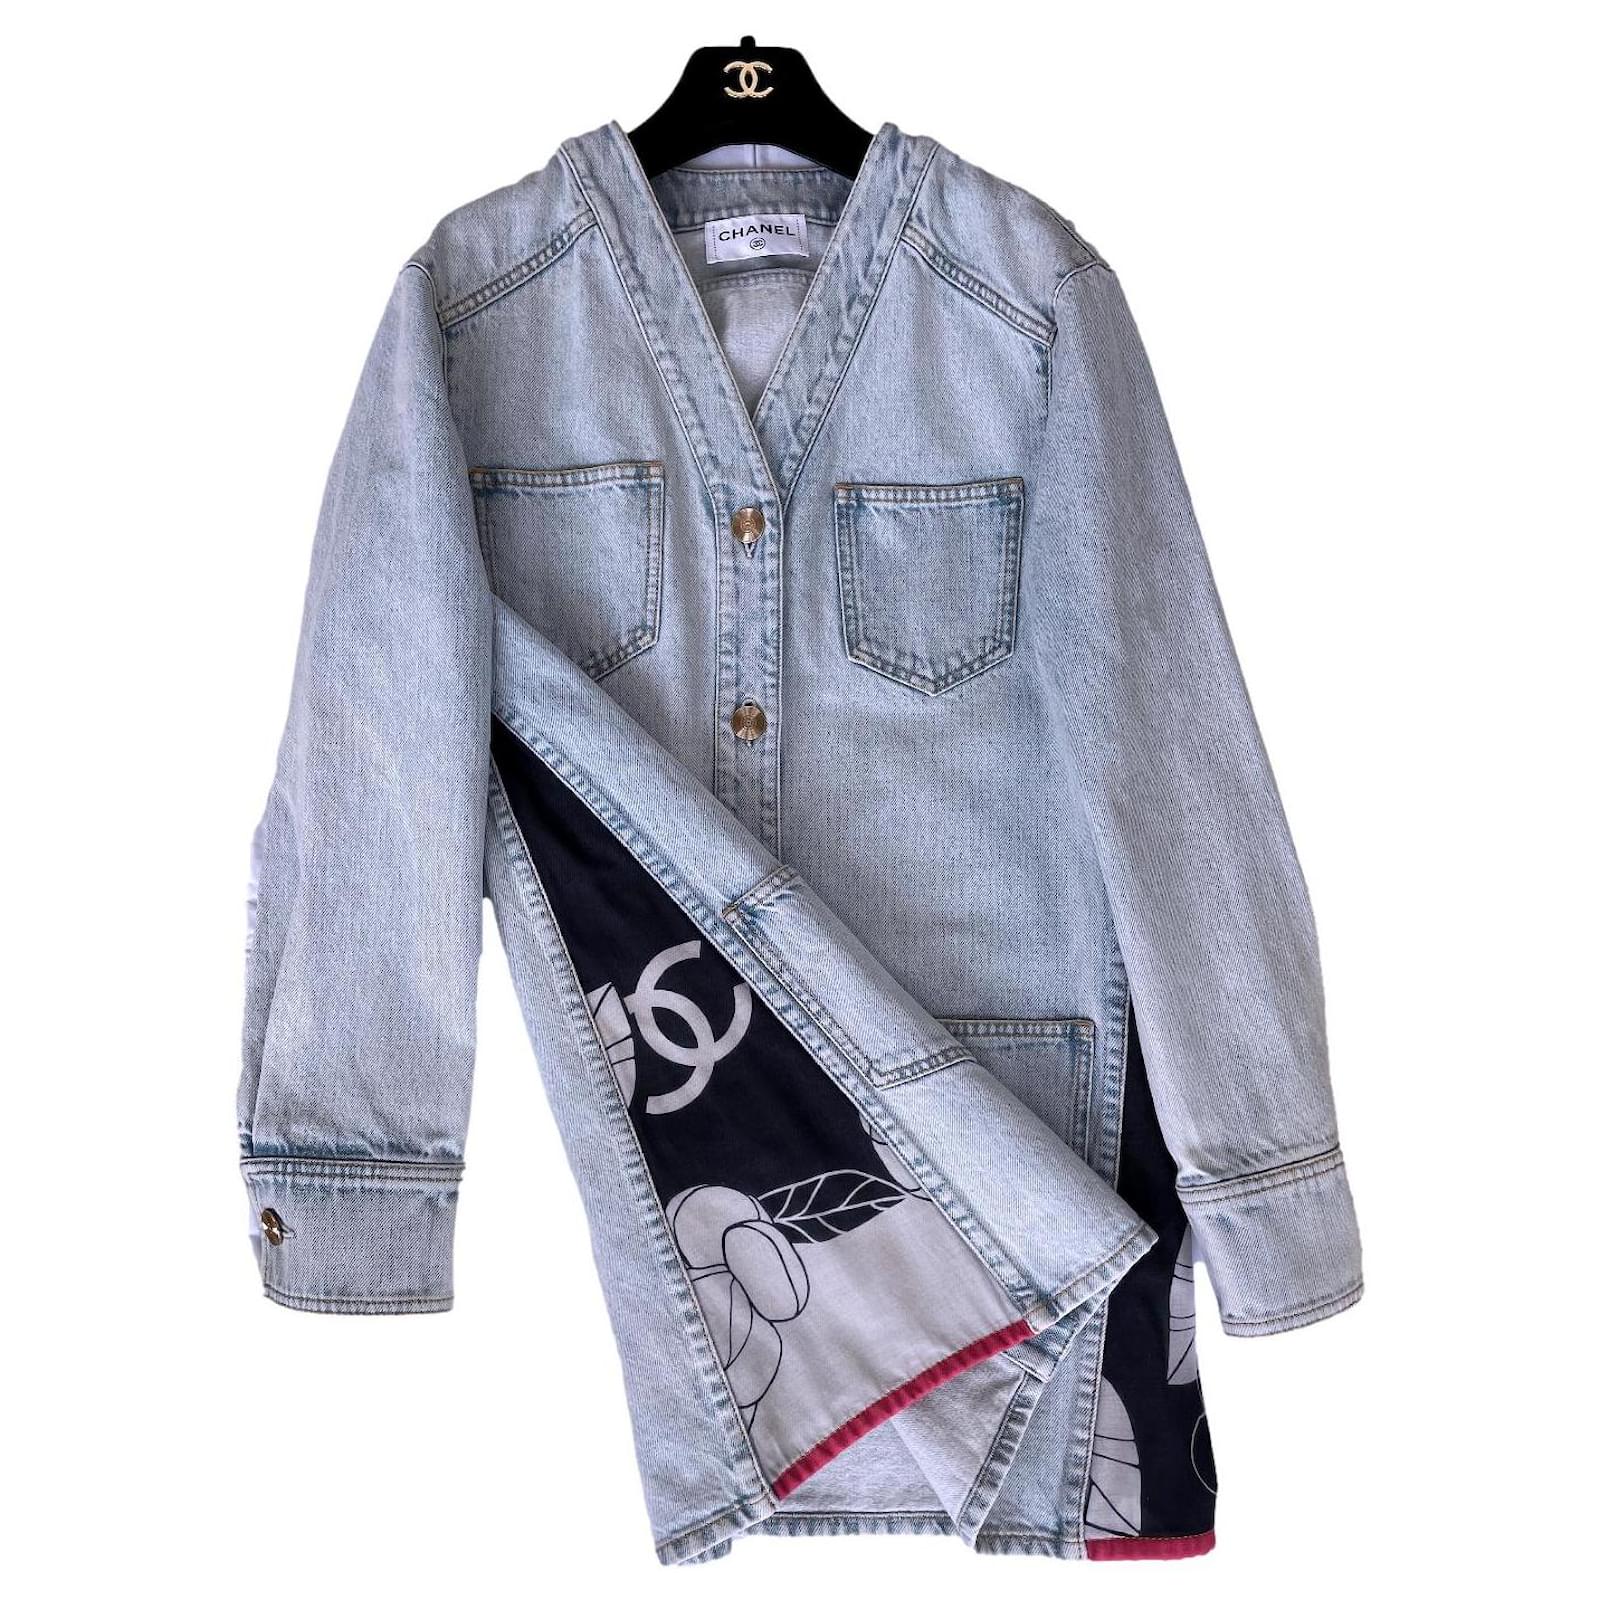 Jacket  Cotton tweed blue white  navy blue  Fashion  CHANEL